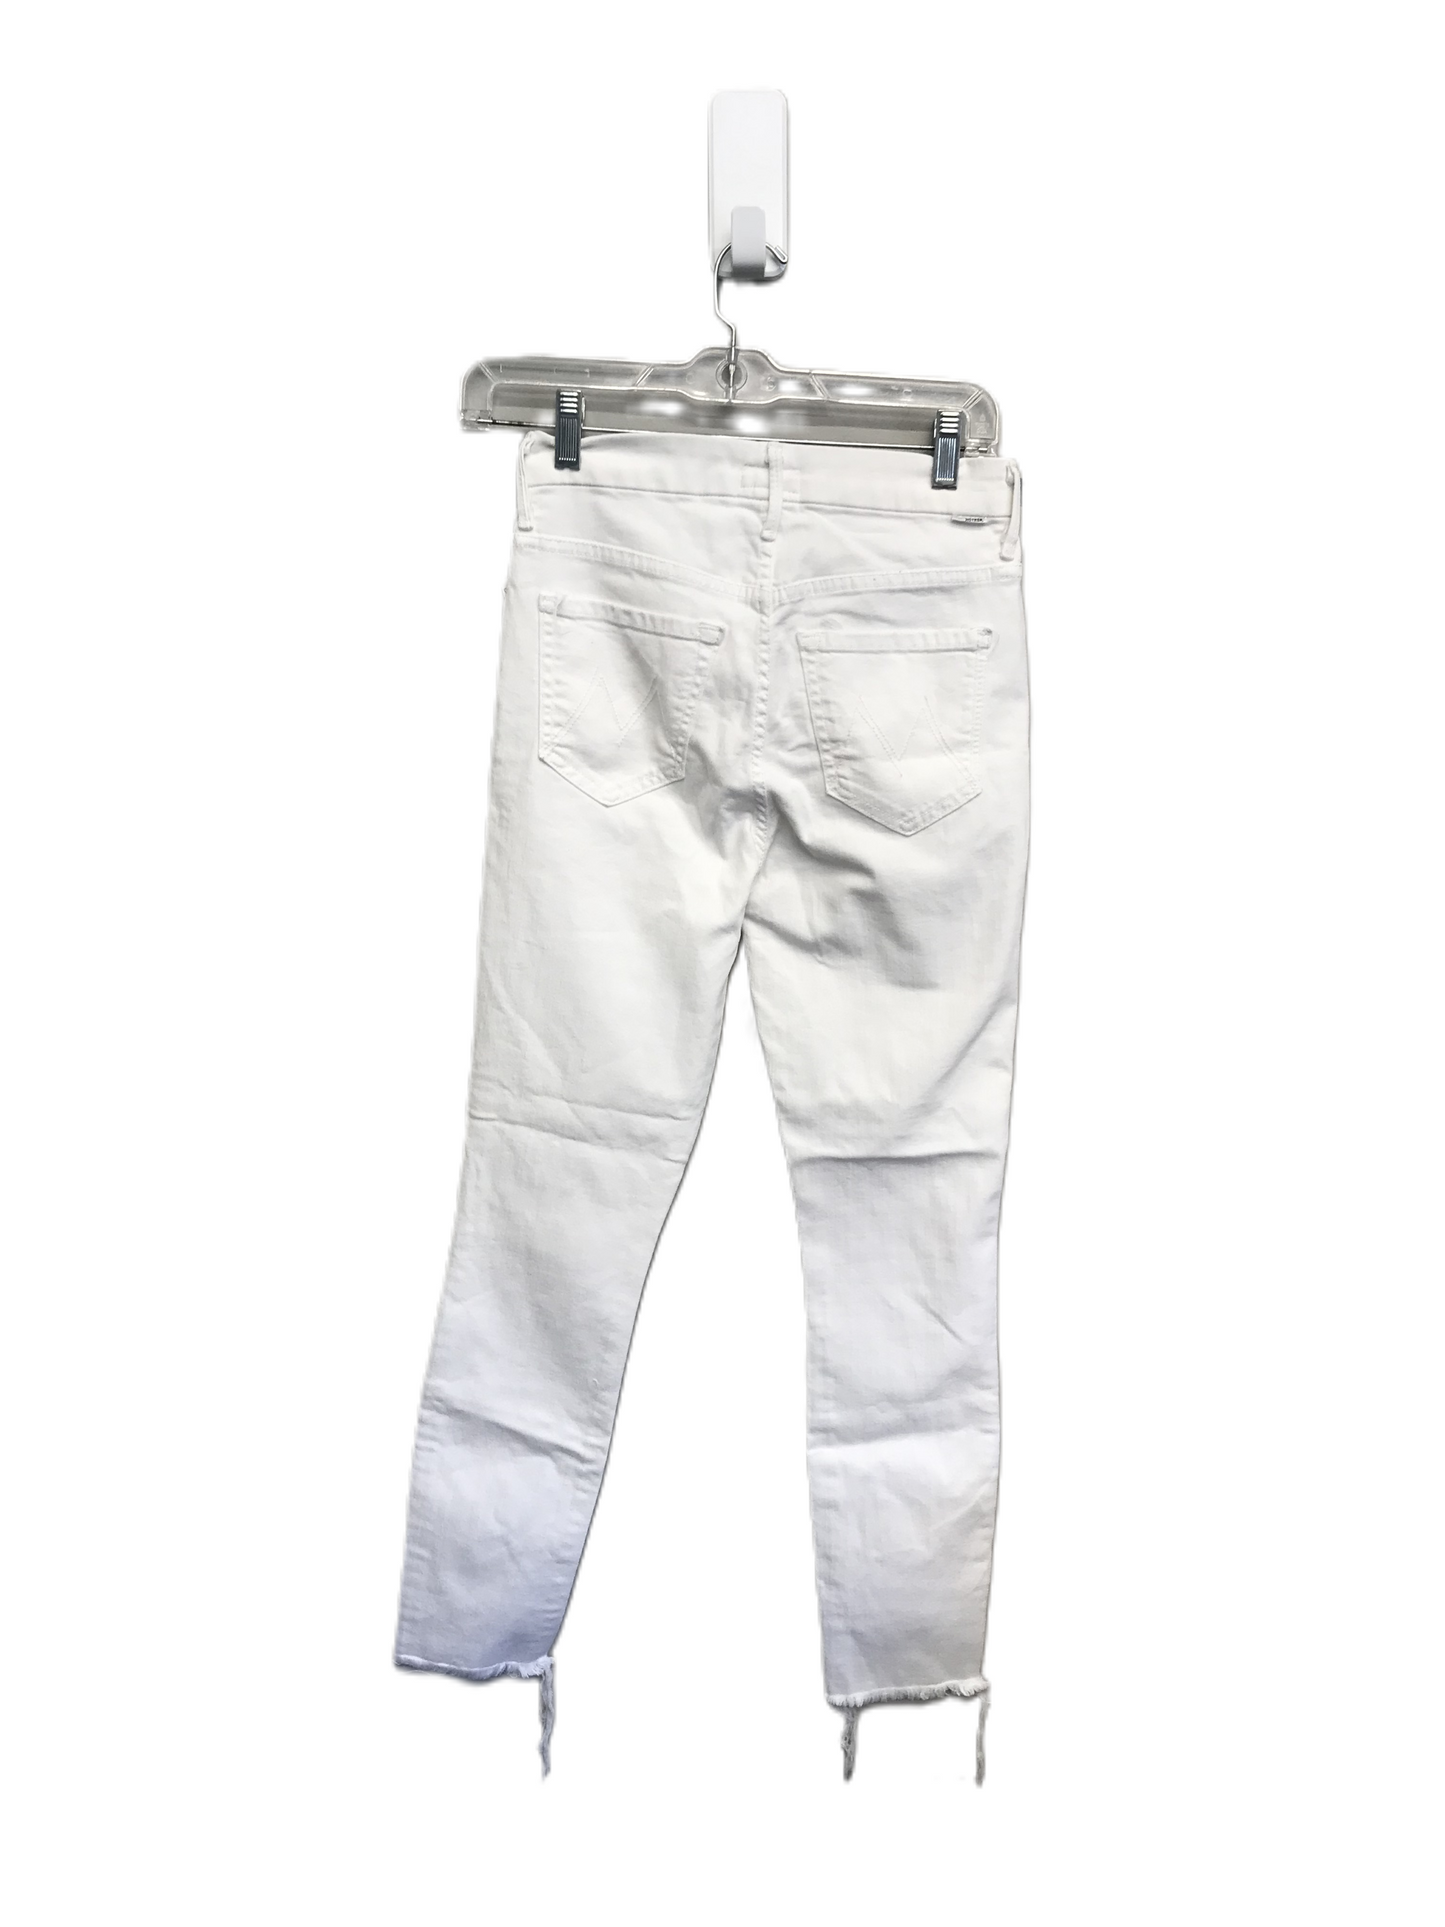 White Denim Jeans Designer By Mother Jeans, Size: 2